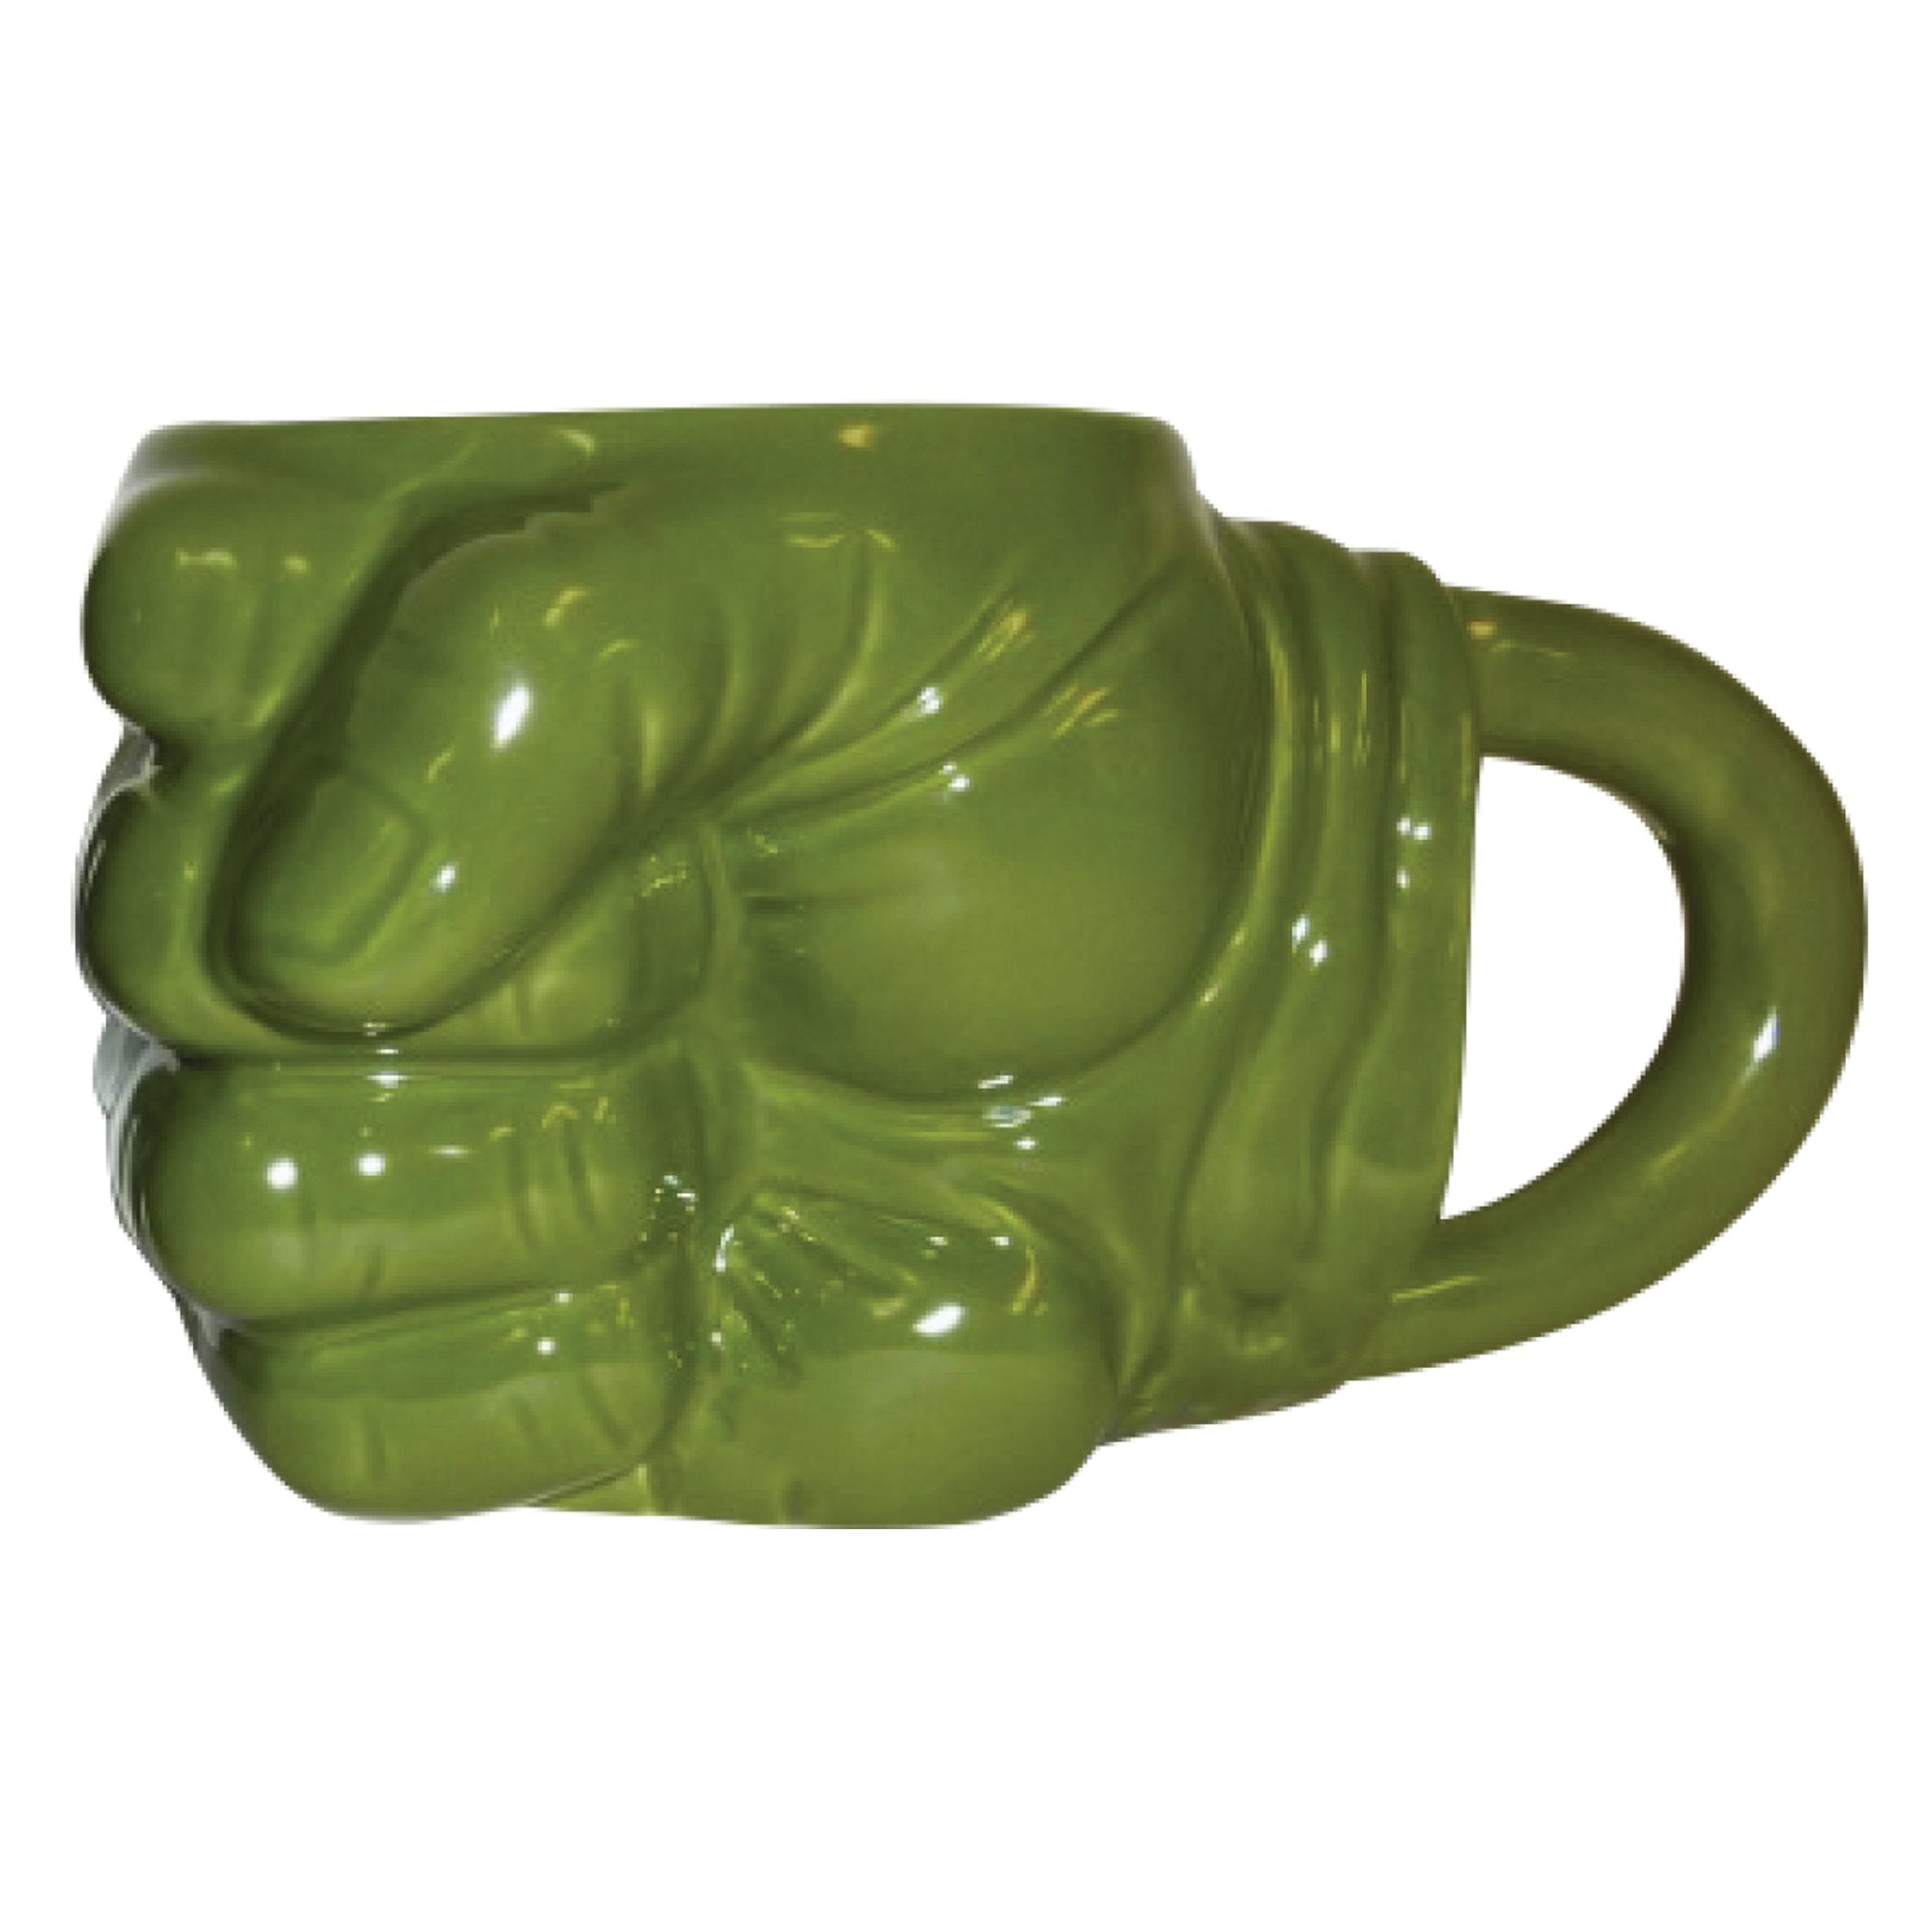 Vandor Marvel Hulk Fist Shaped Ceramic Soup Coffee Mug Cup, 4.3 x 6.3 Inch, 1 Count (Pack of 1)